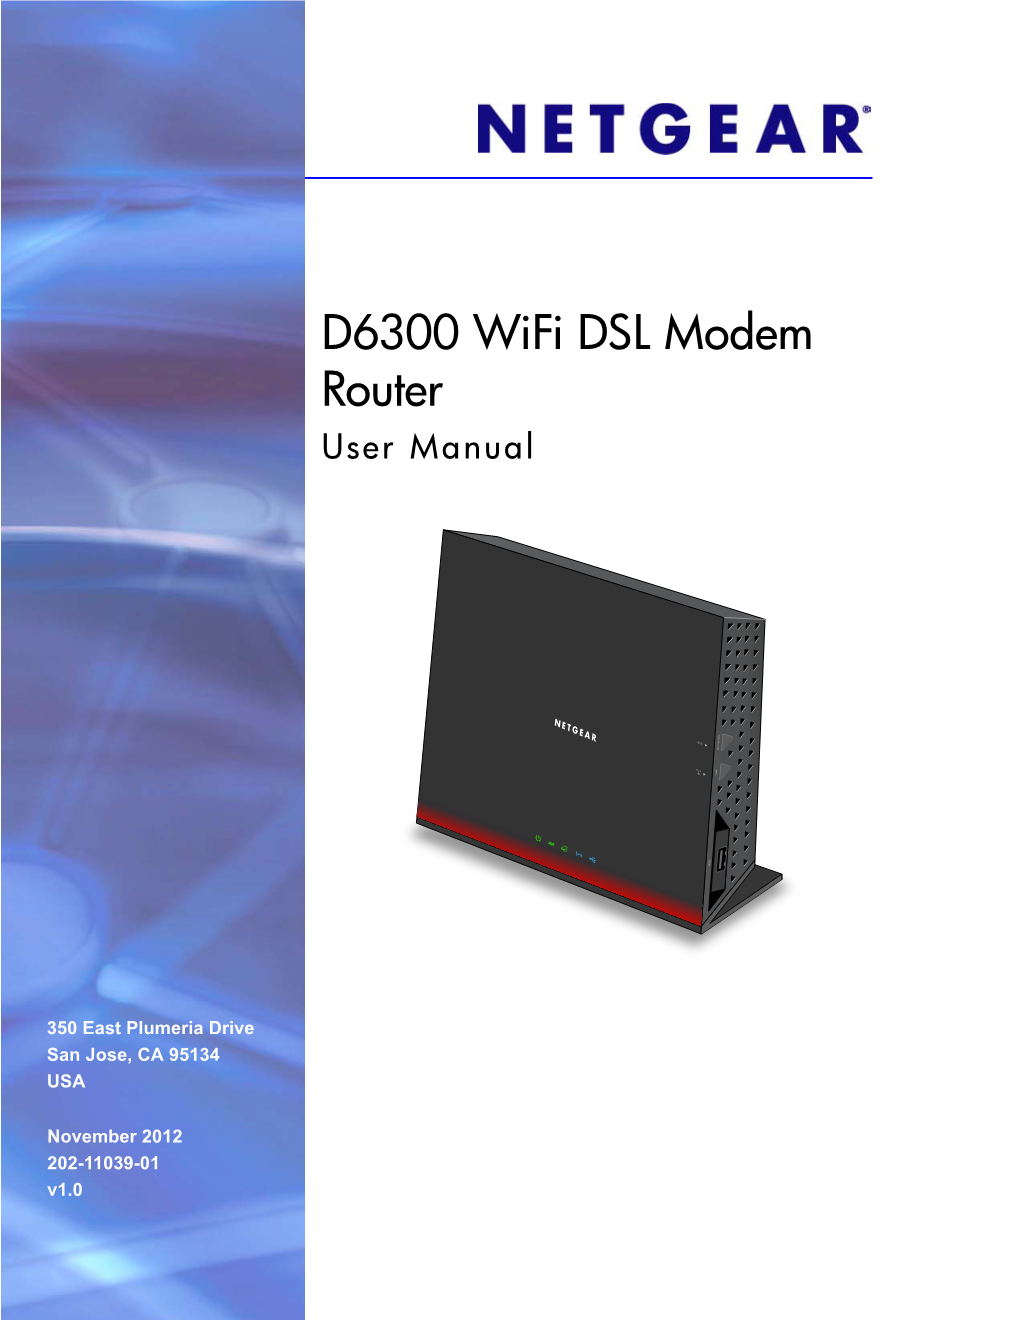 D6300 Wifi DSL Modem Router User Manual